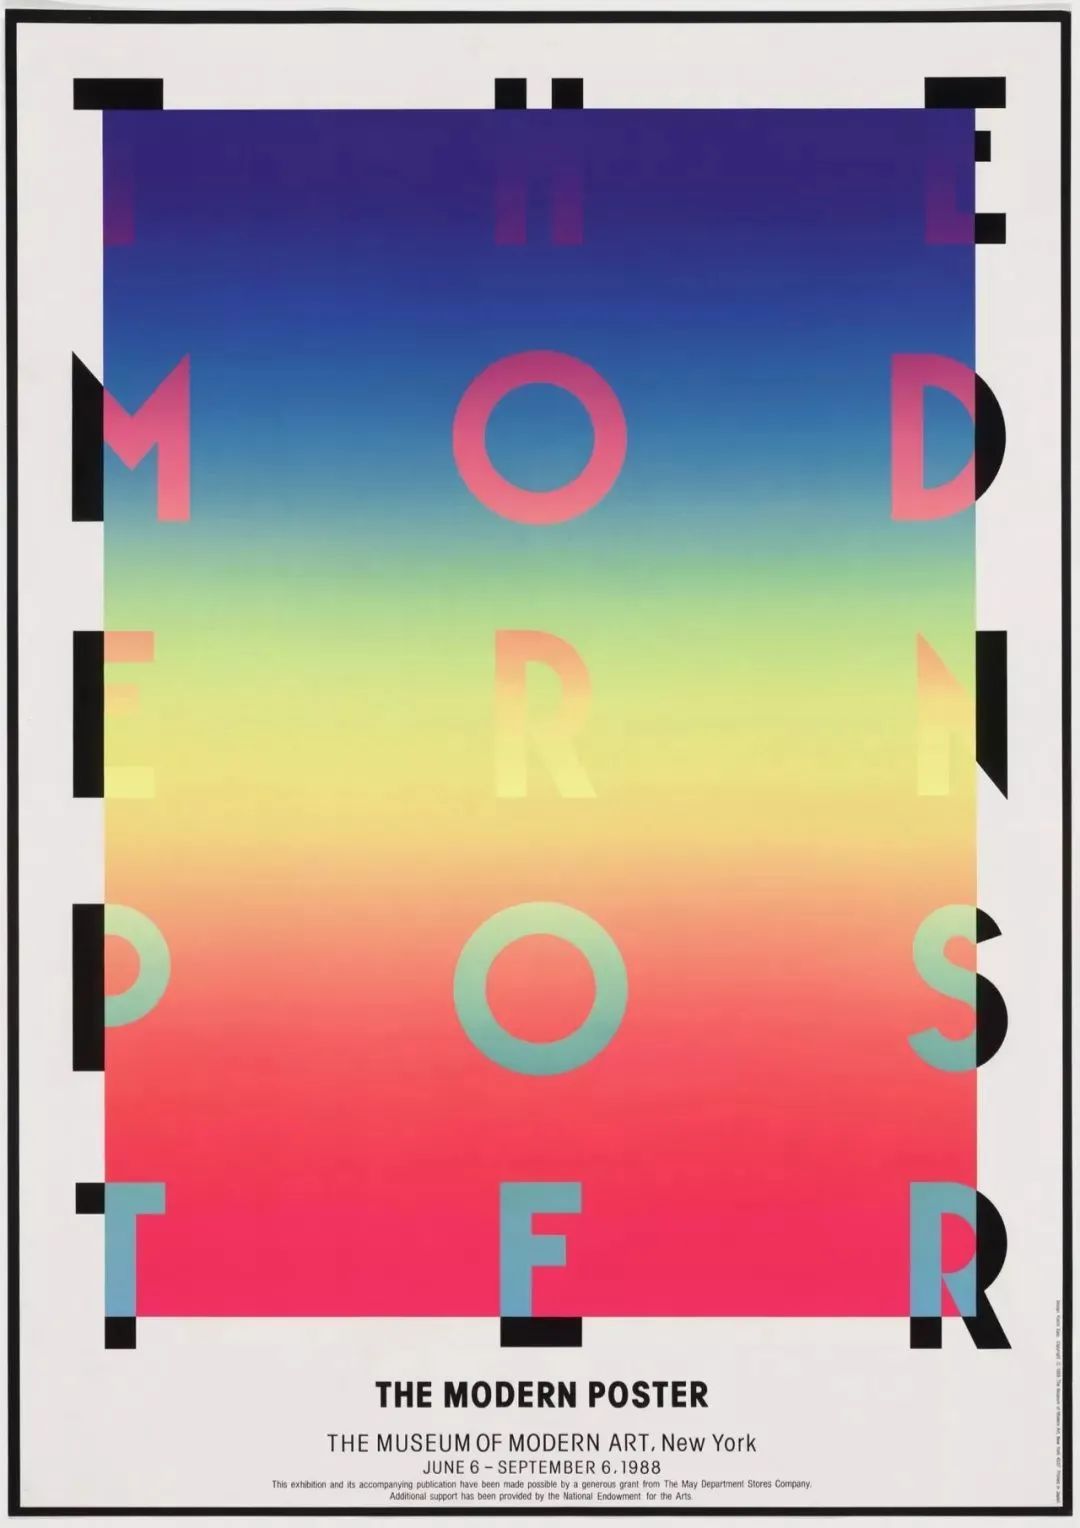 佐藤晃一Koichi Sato. The Modern Poster, The Museum of Modern Art, New York. 1988